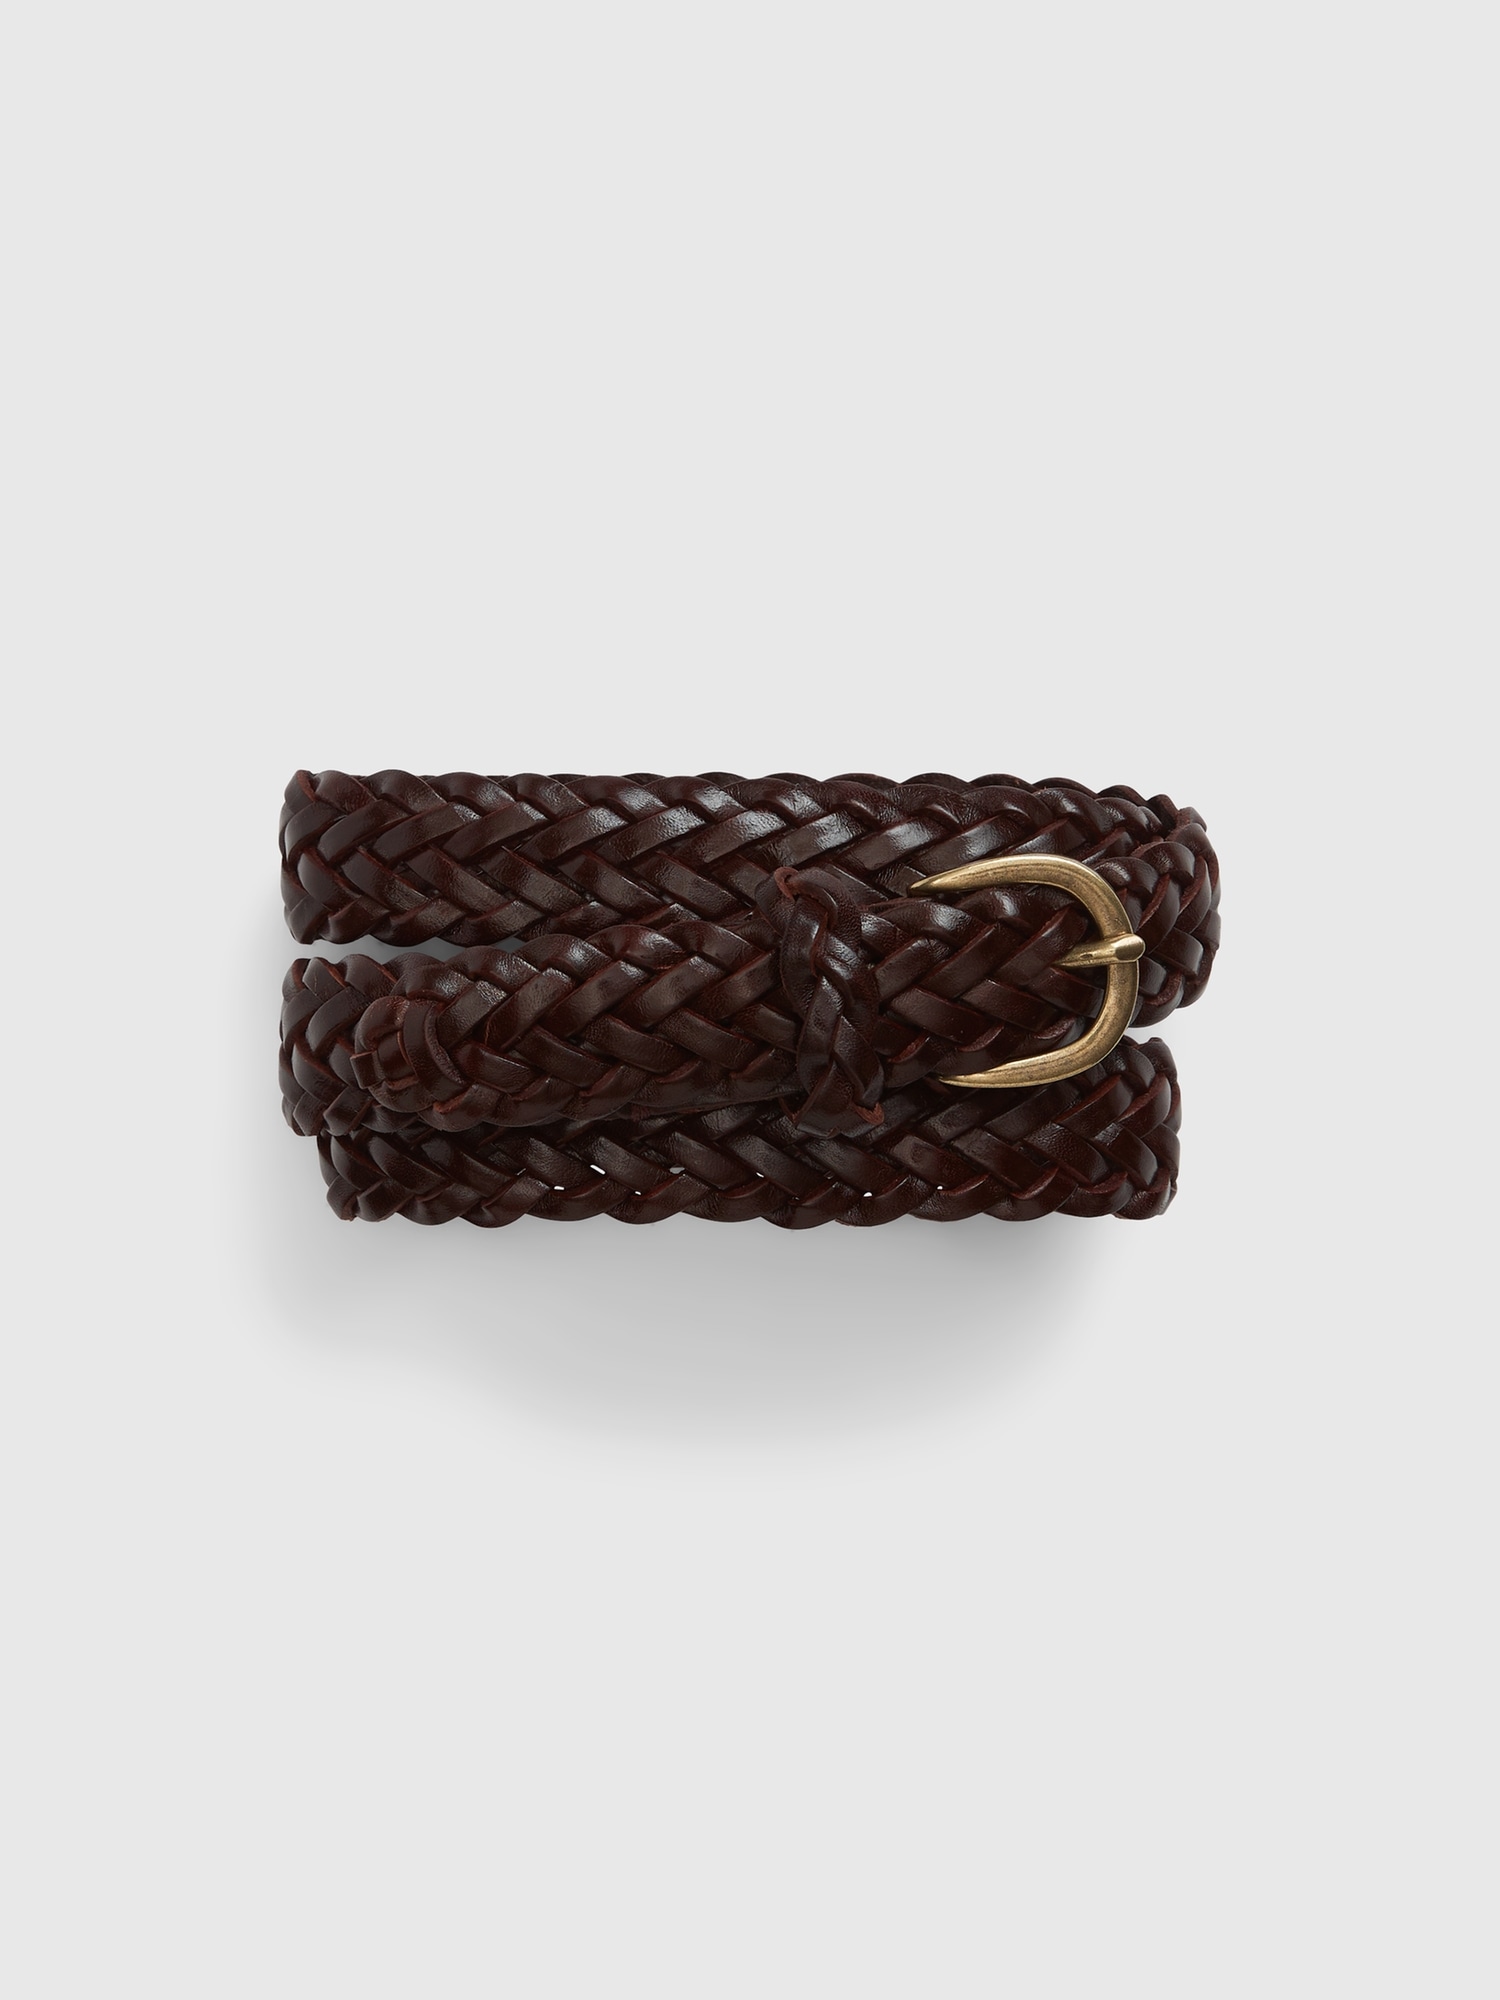 Gap Braided Leather Belt In Cognac